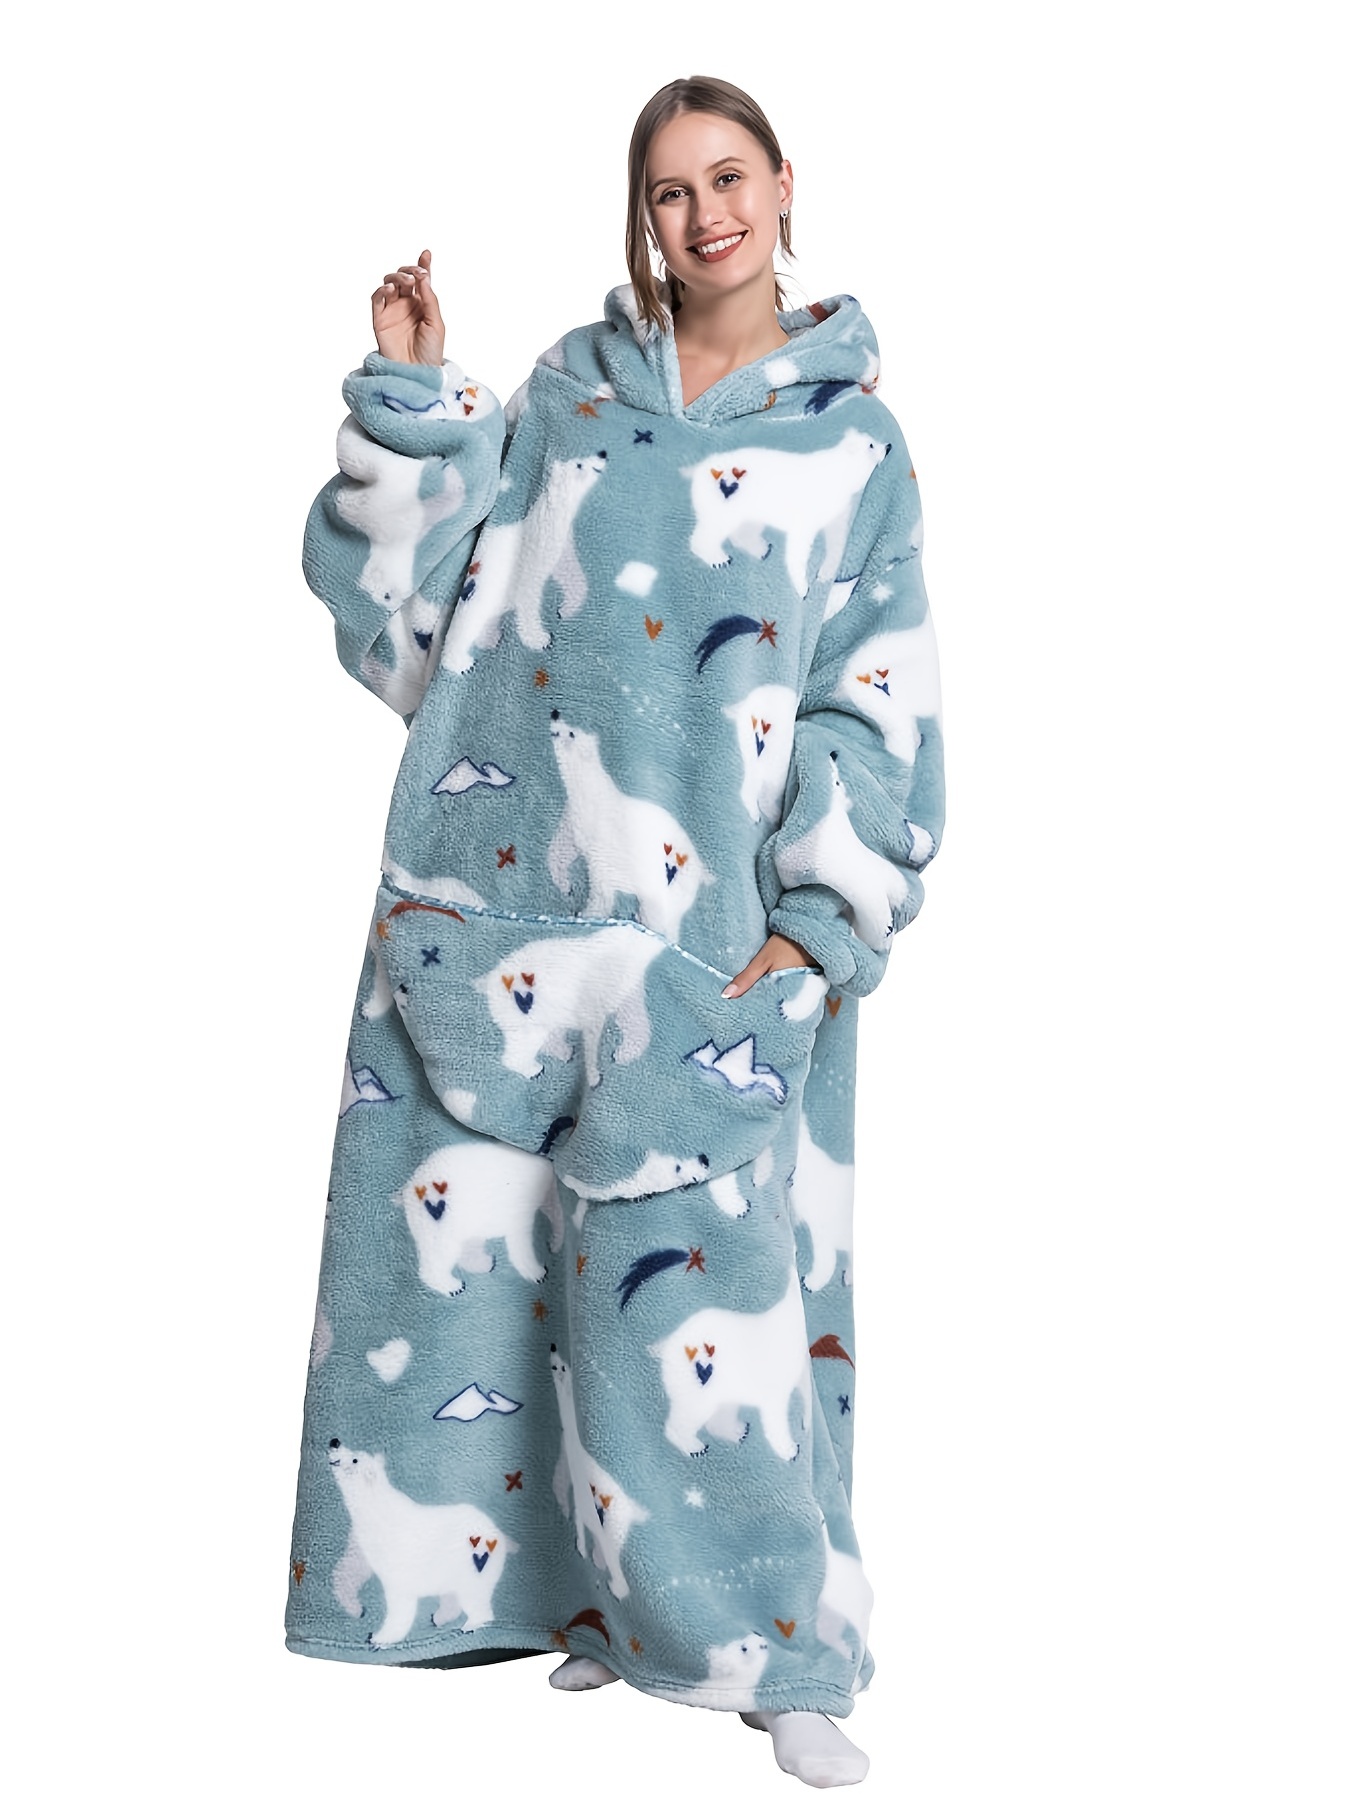 Disney Pyjamas für Frauen, Fluffy Ladies Fleece Germany